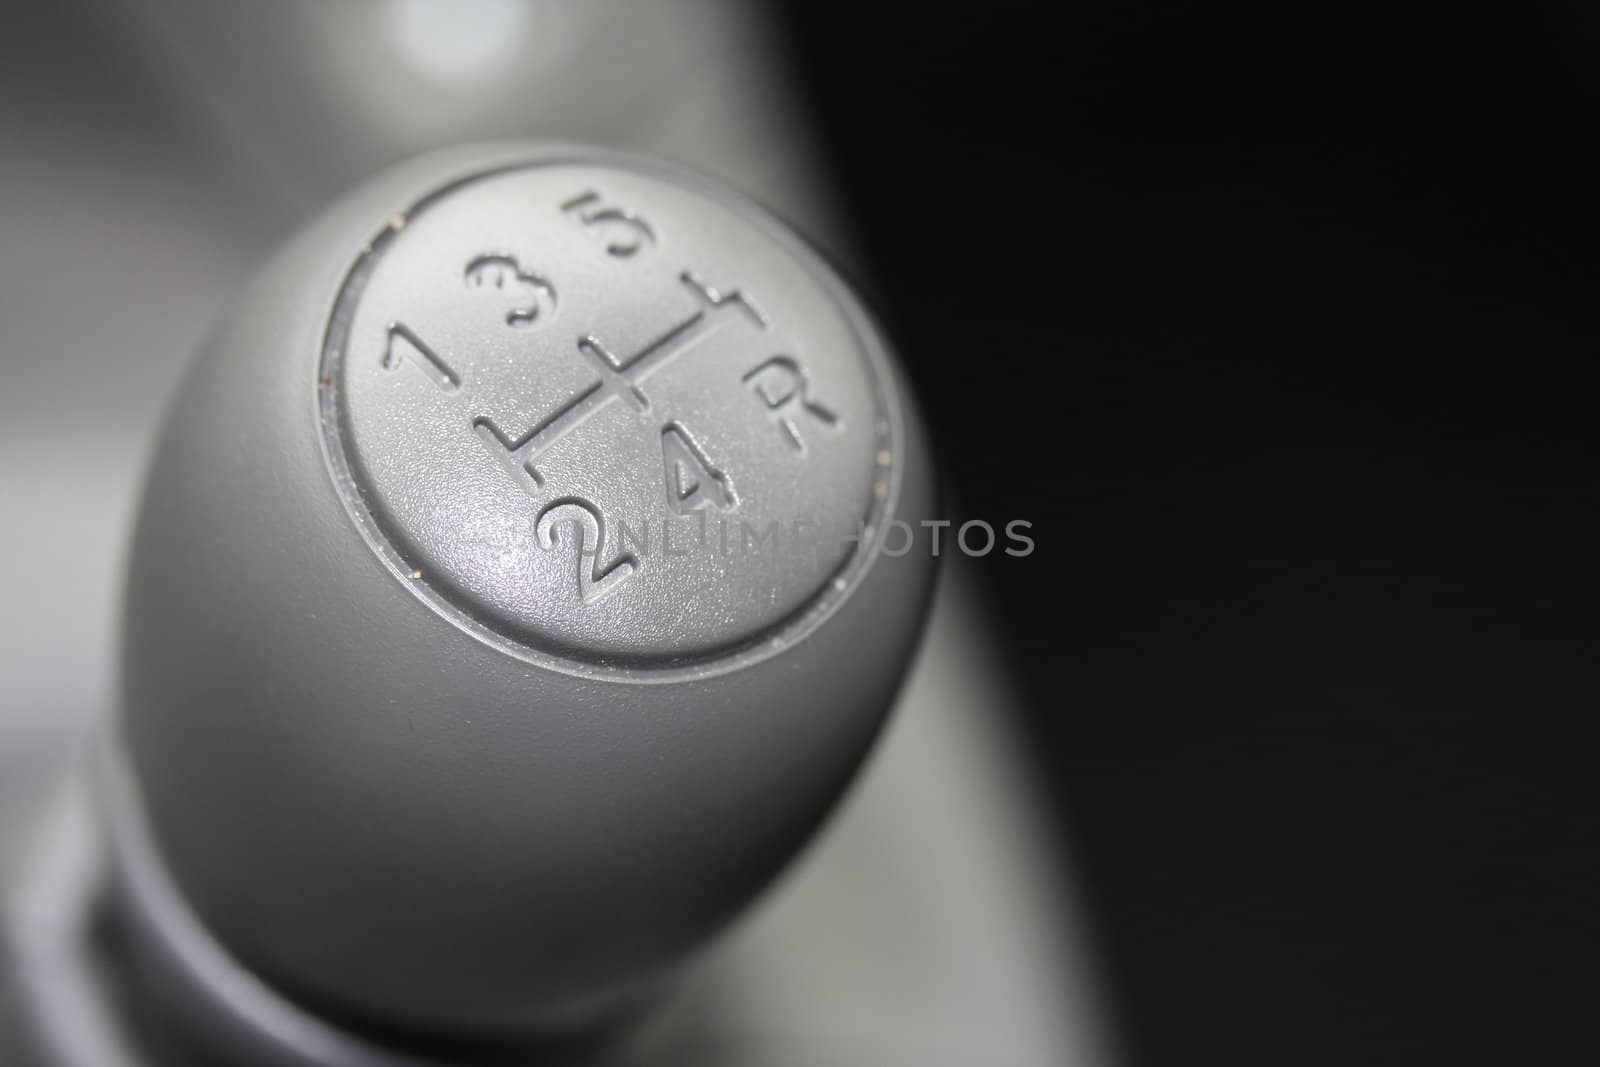 detail of a car interior, stick shift car